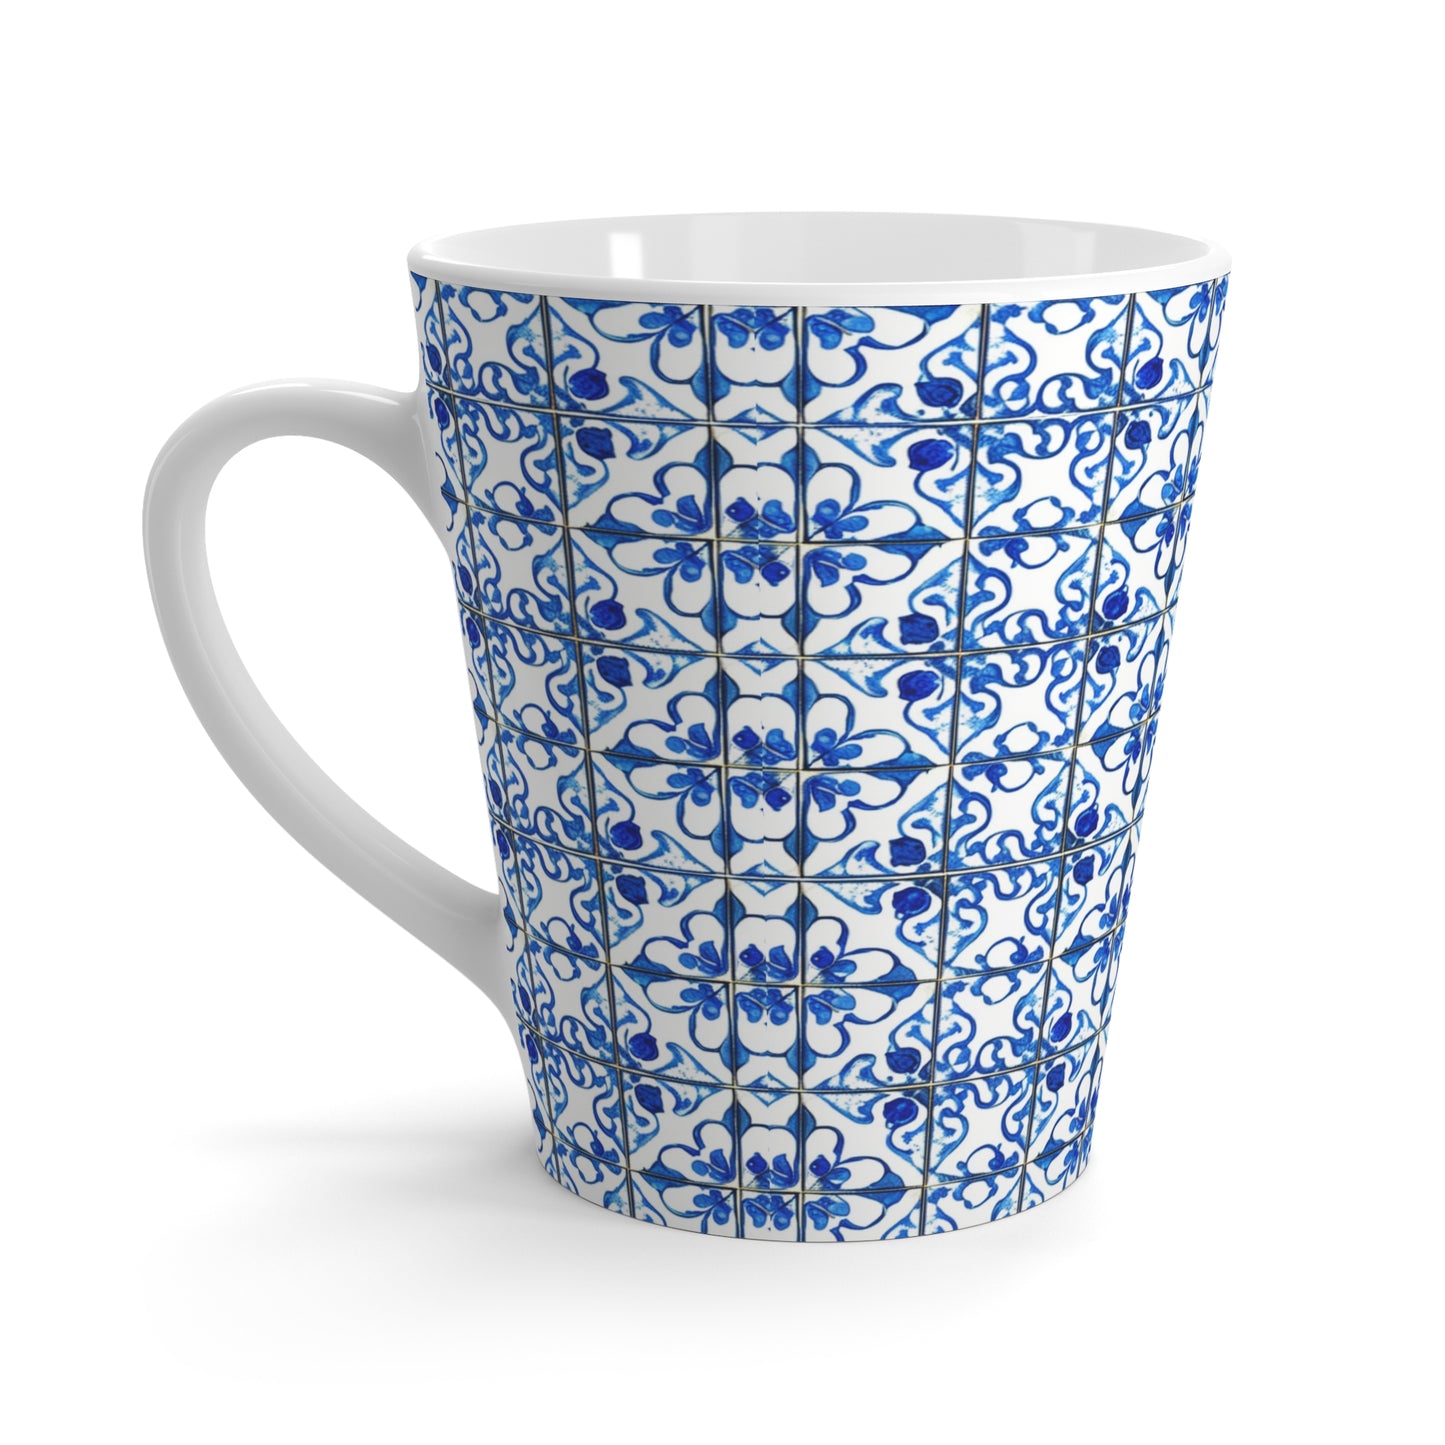 Amsterdam Cafe Blue and White Tile Coffee Cappuccino Tea Decorative Latte Mug